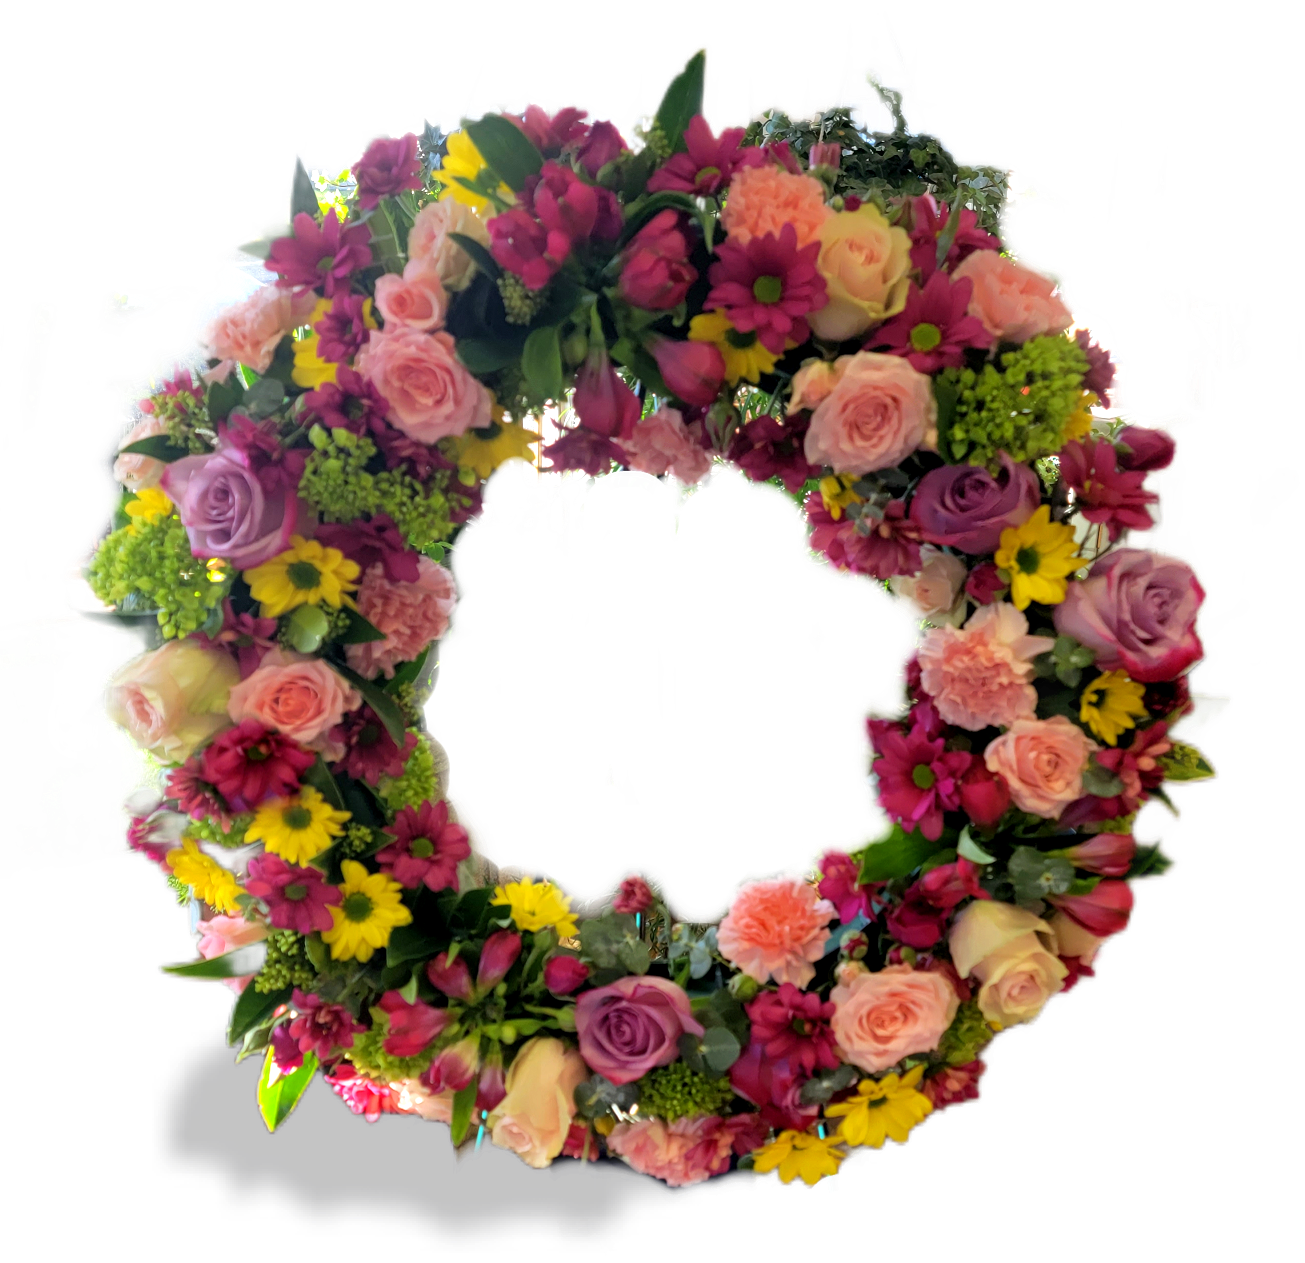 Wreath of Love